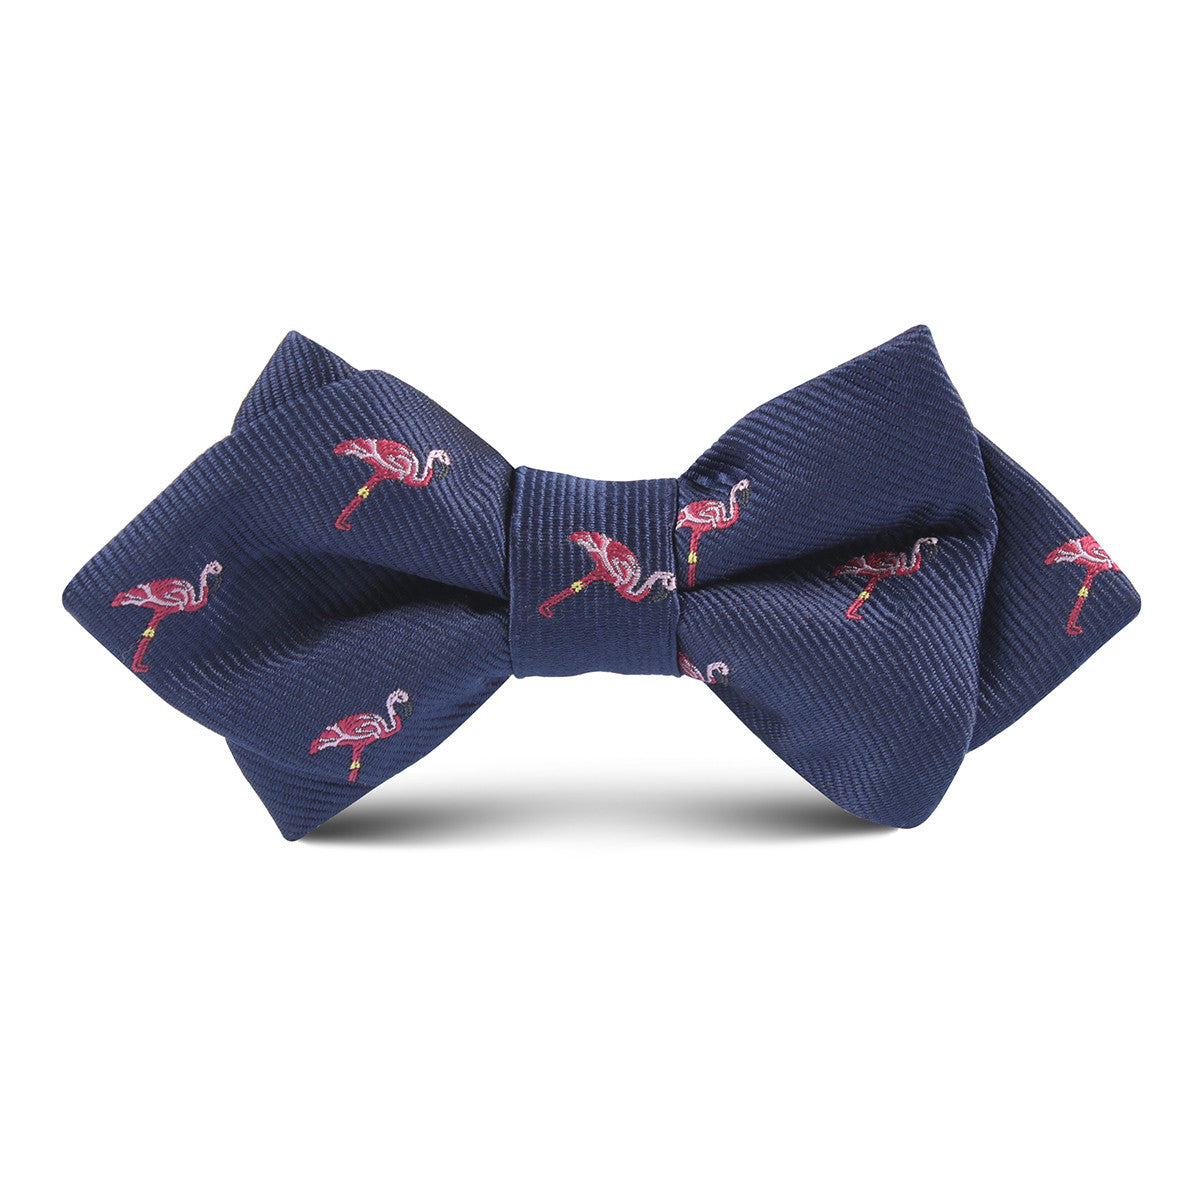 The Navy Blue Pink Flamingo Kids Diamond Bow Tie